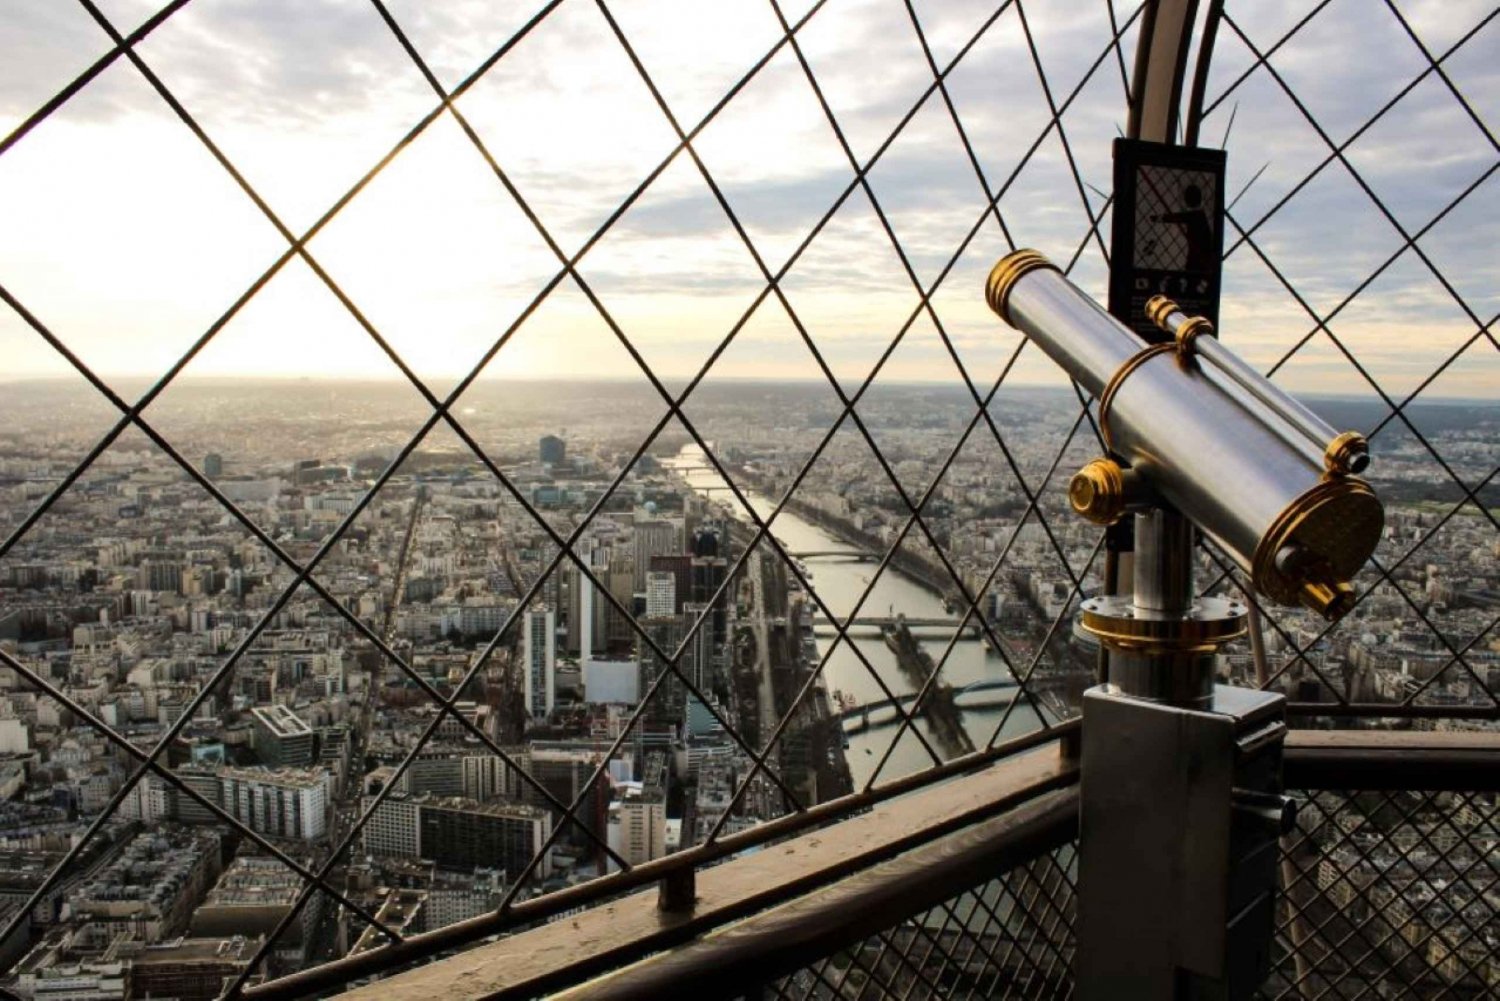 Paris: Eiffel Tower 2nd Floor Ticket, Louvre Museum & Cruise